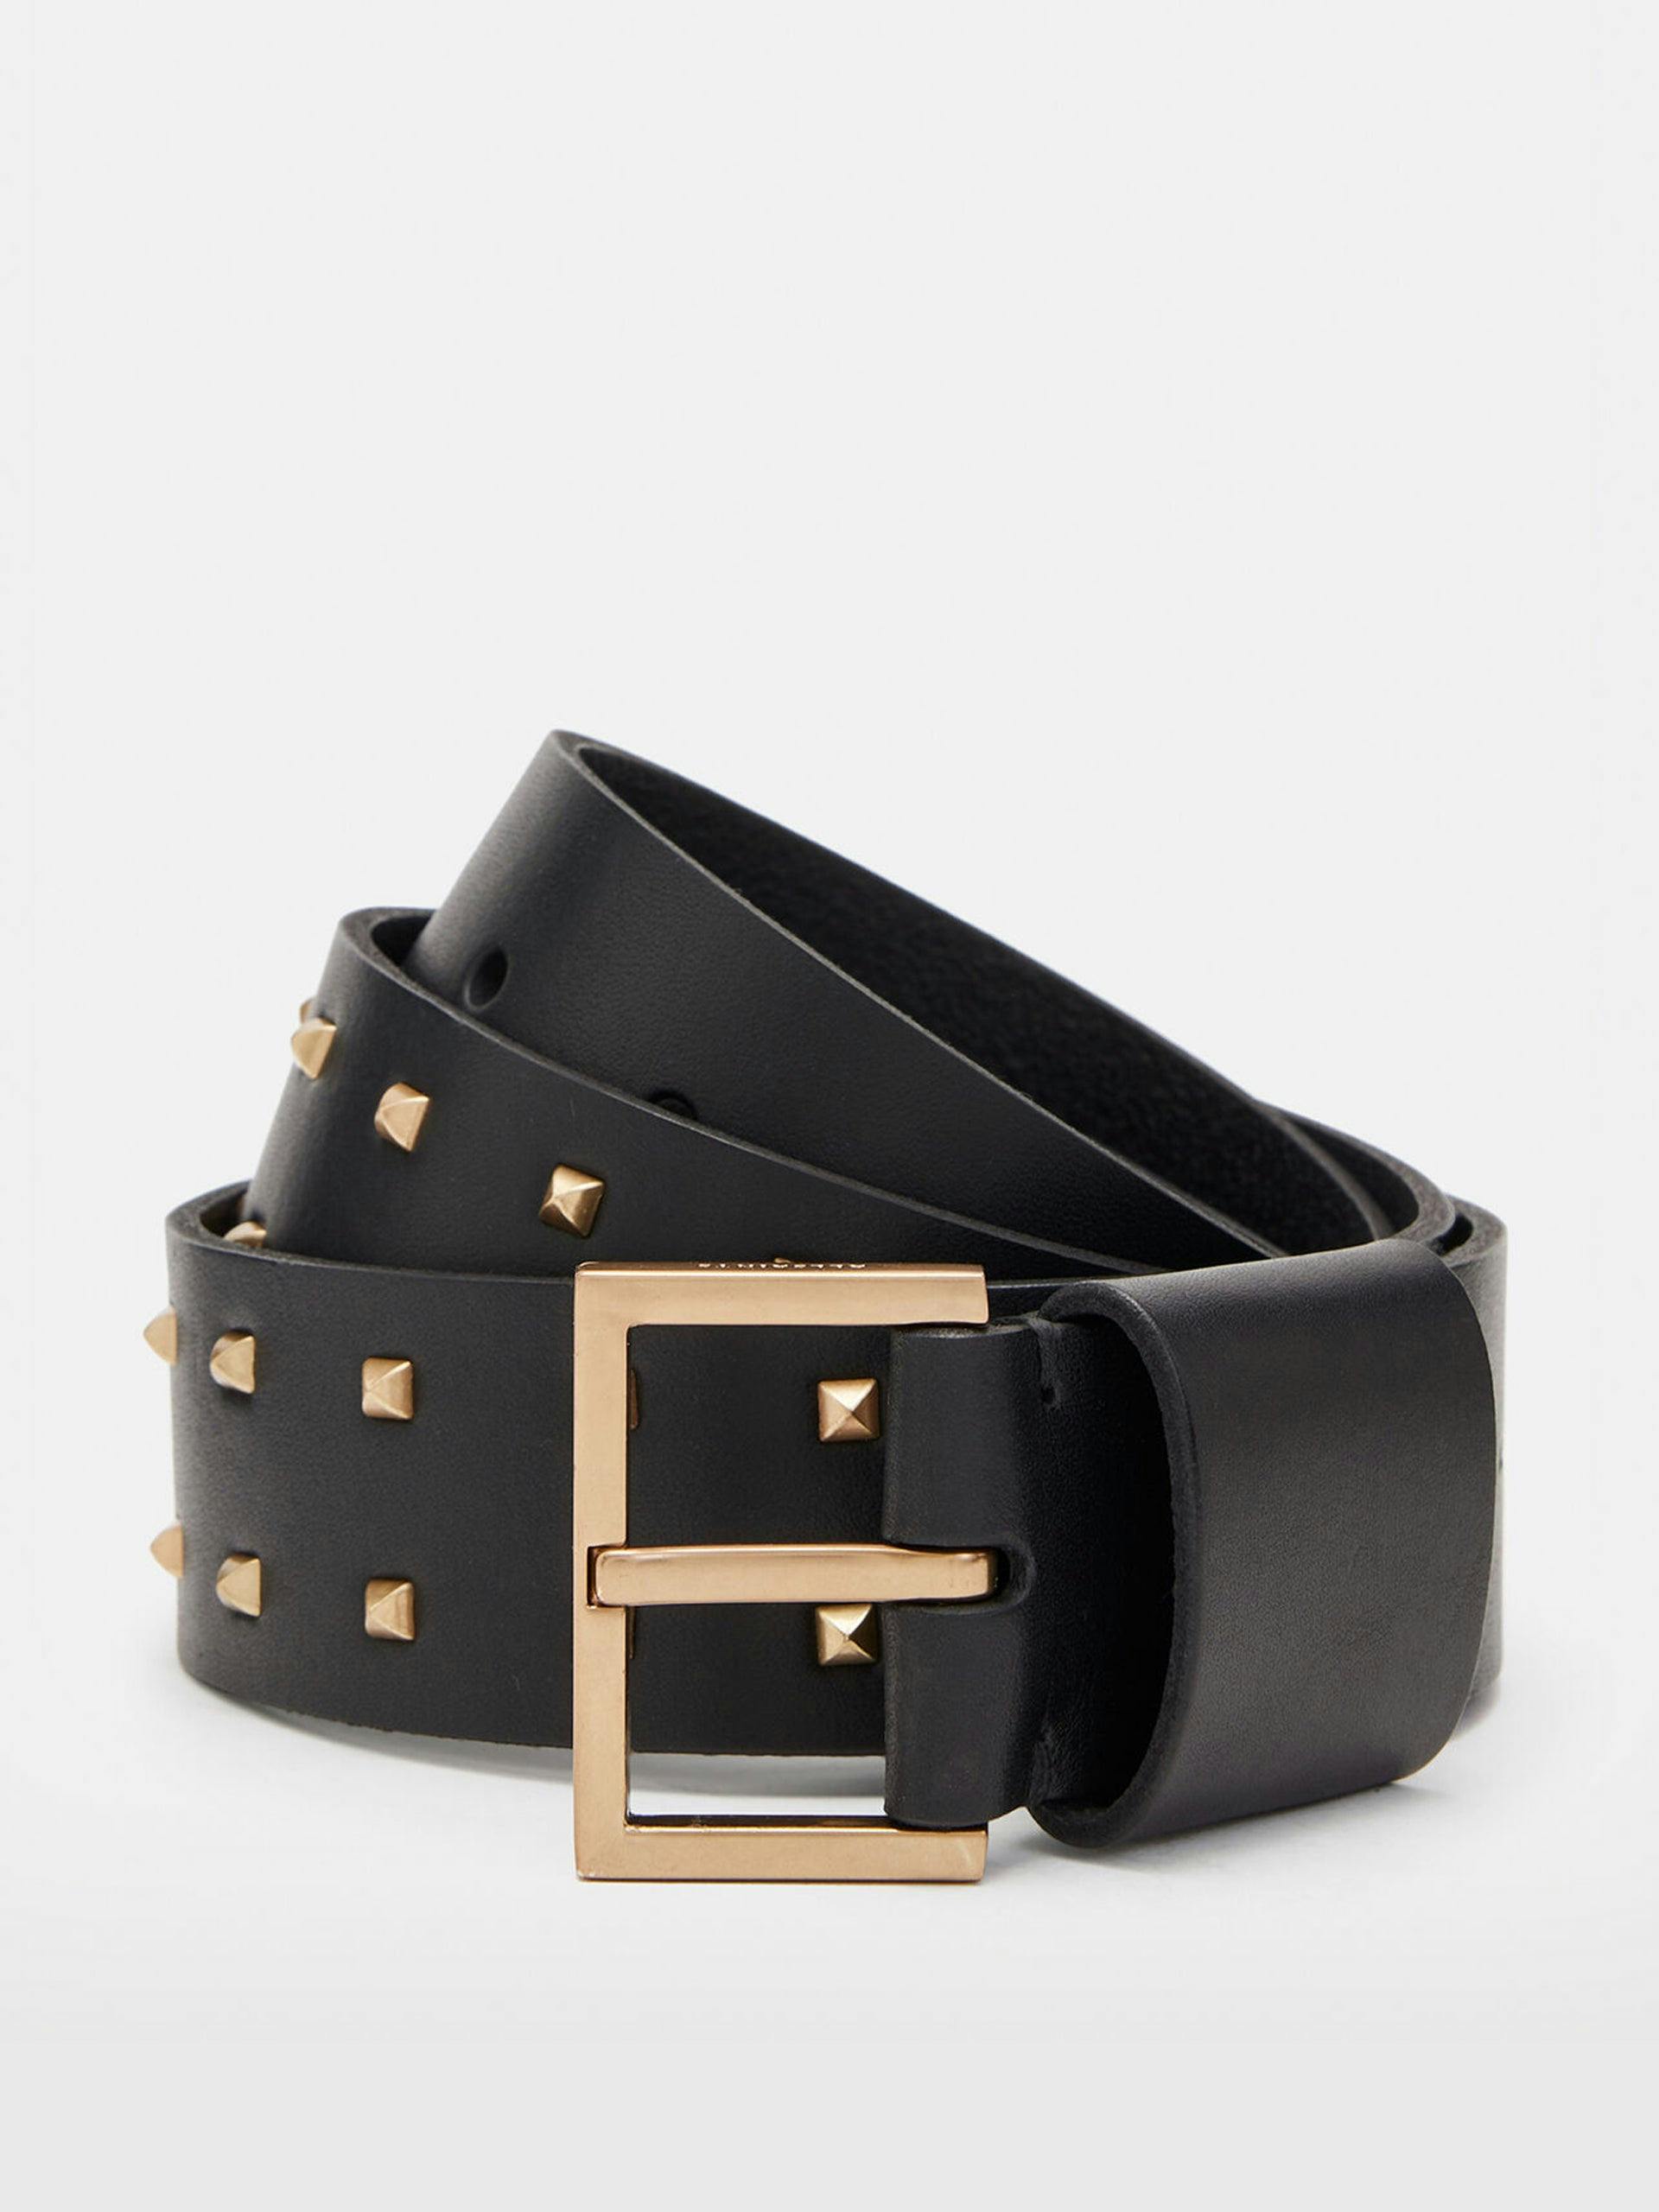 Maxi leather studded belt